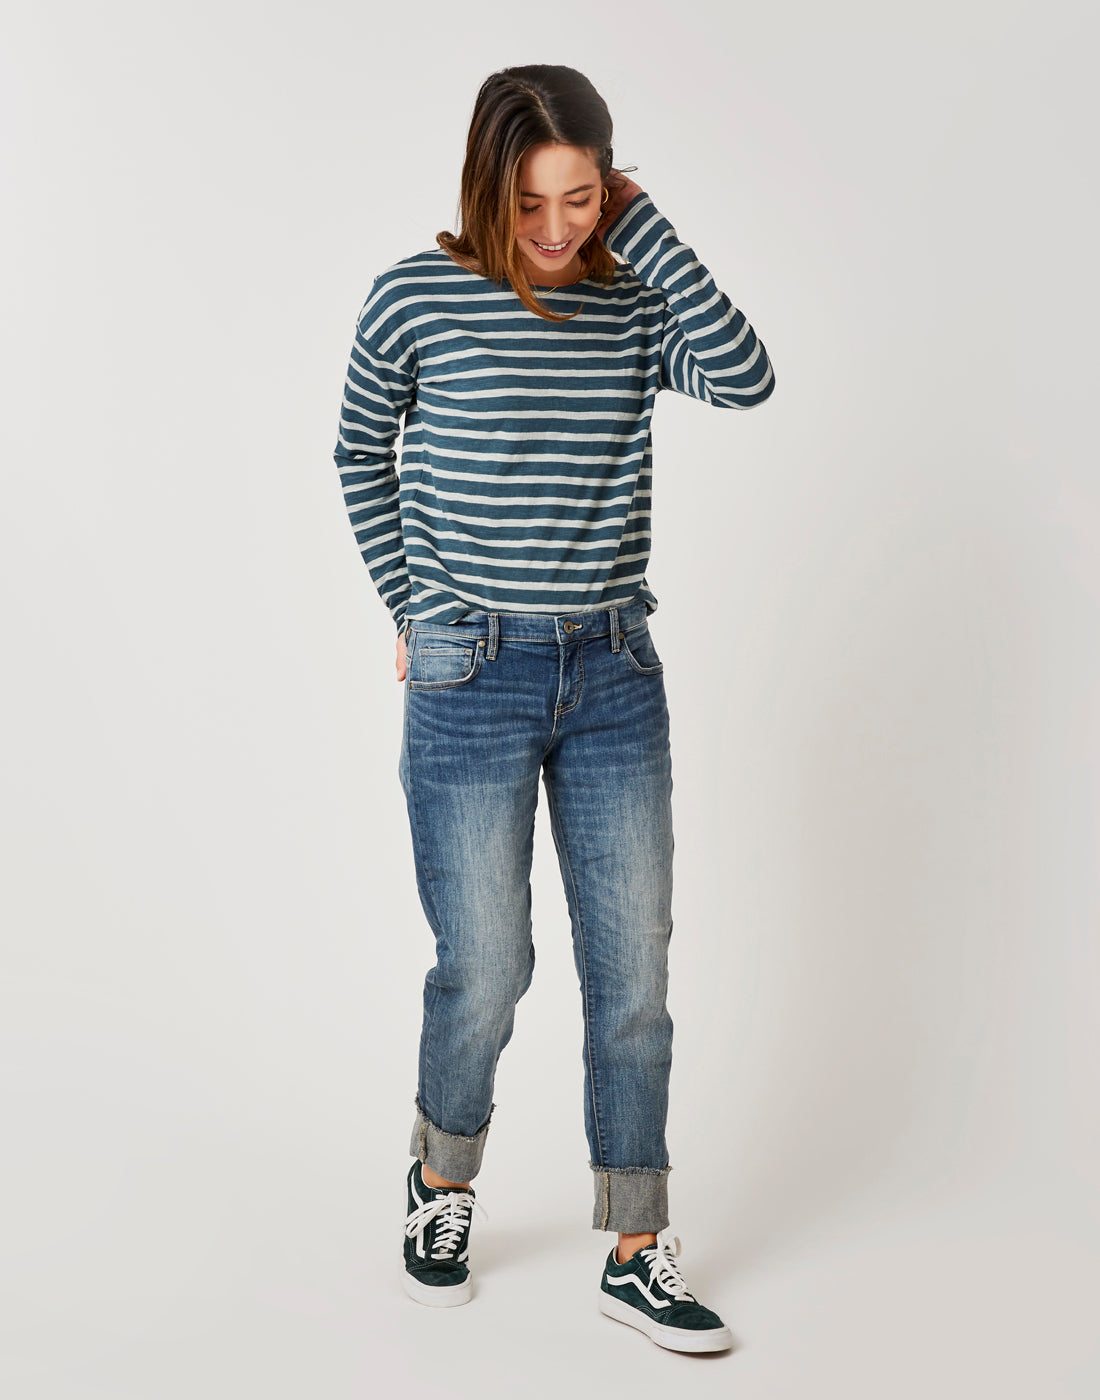 J. Crew Pants Fits Womens 30 x 29 Green Corduroy Trousers – Proper